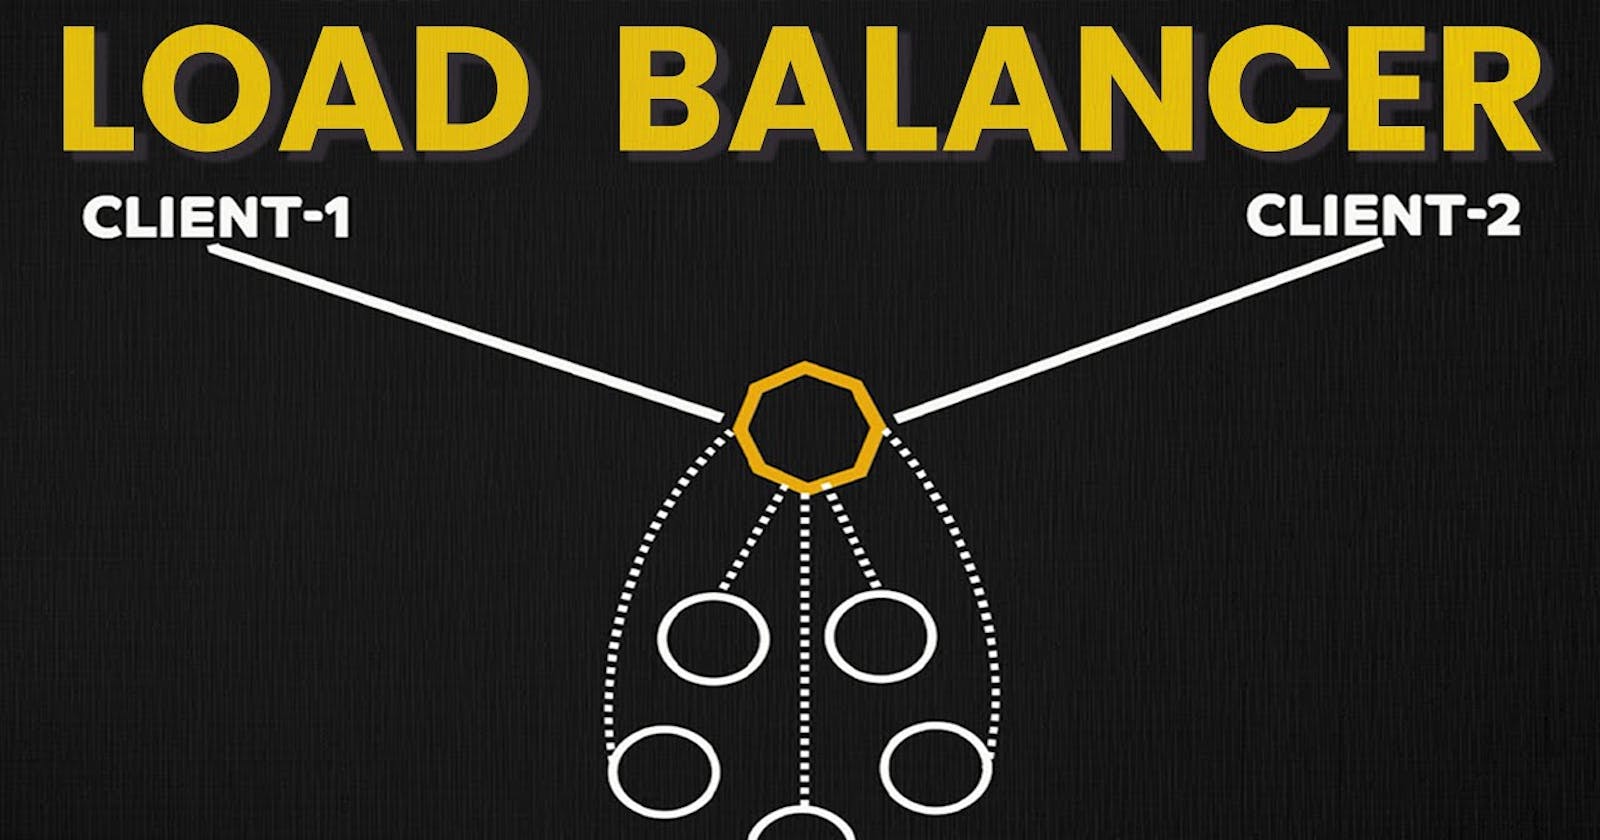 Do you need Load Balancer?